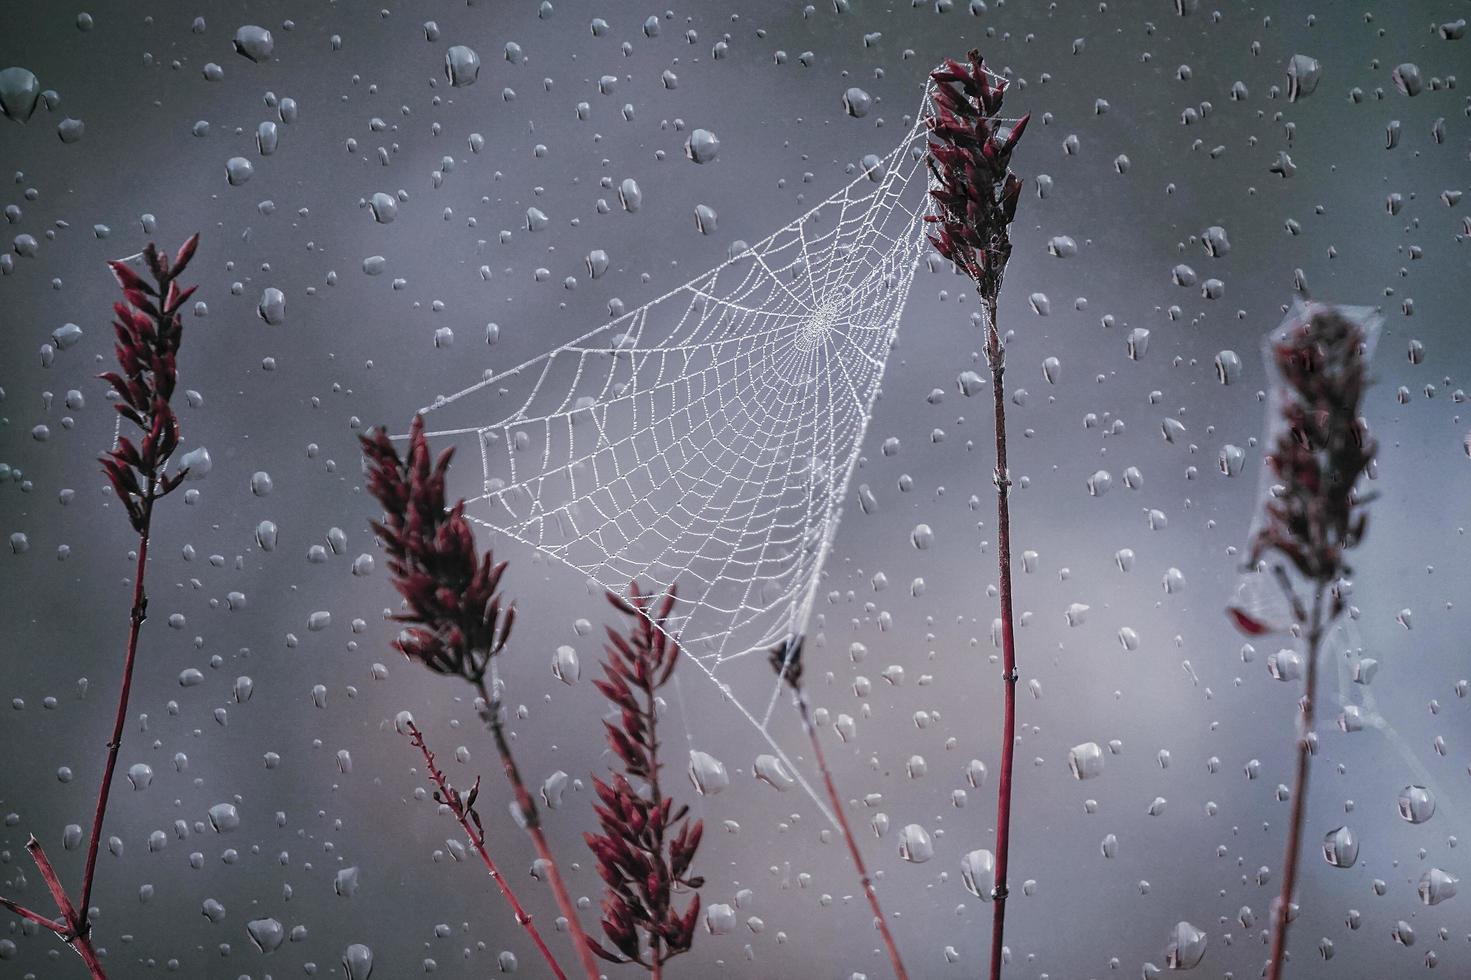 spider web and raindrops in autumn season photo